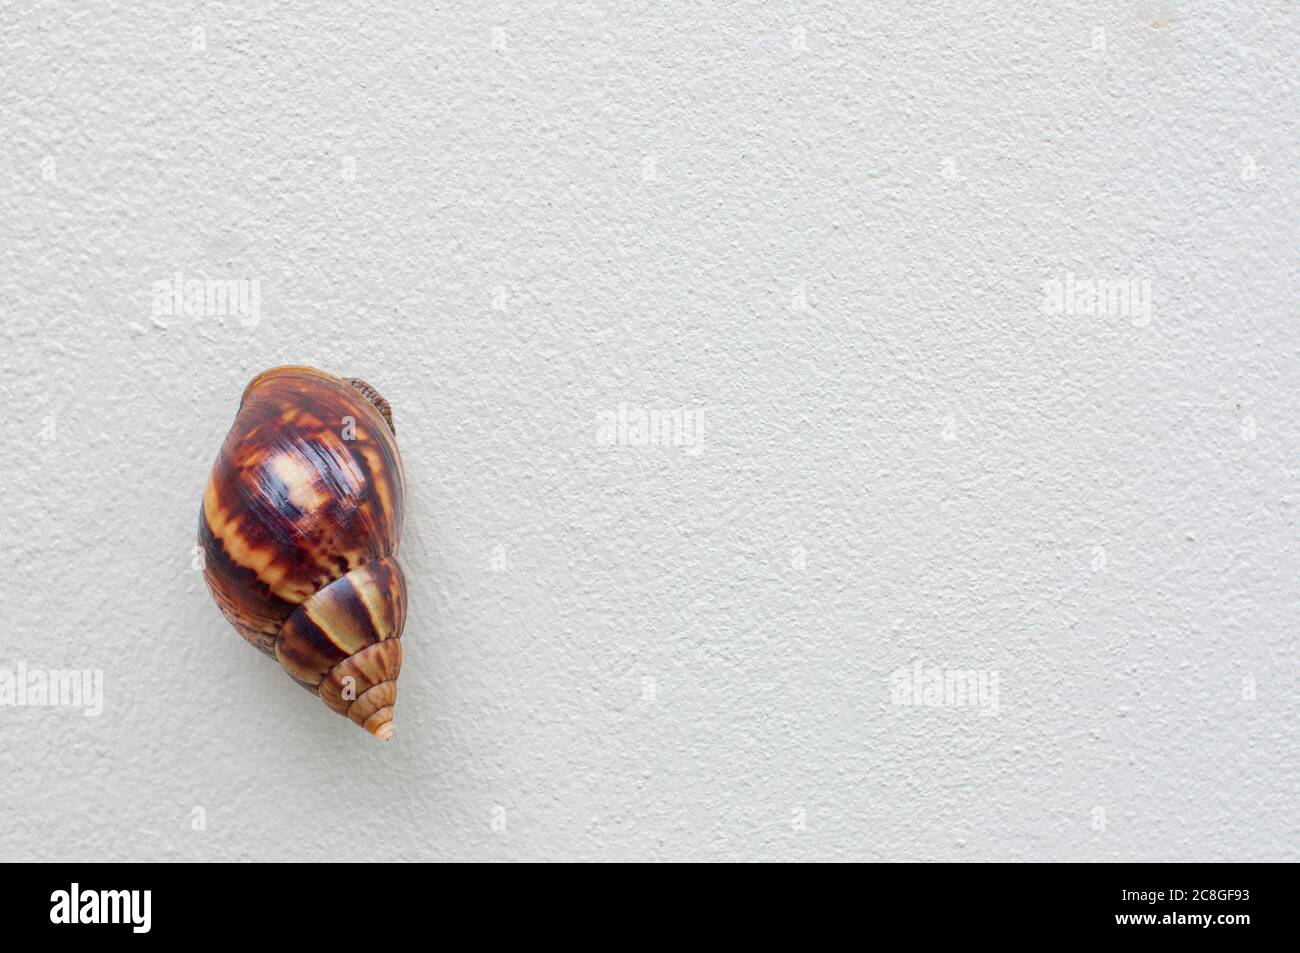 Snail, Land snail, Garden snail, Terrestrial pulmonate gastropod molluscs climb up on white gray cement wall. Stock Photo